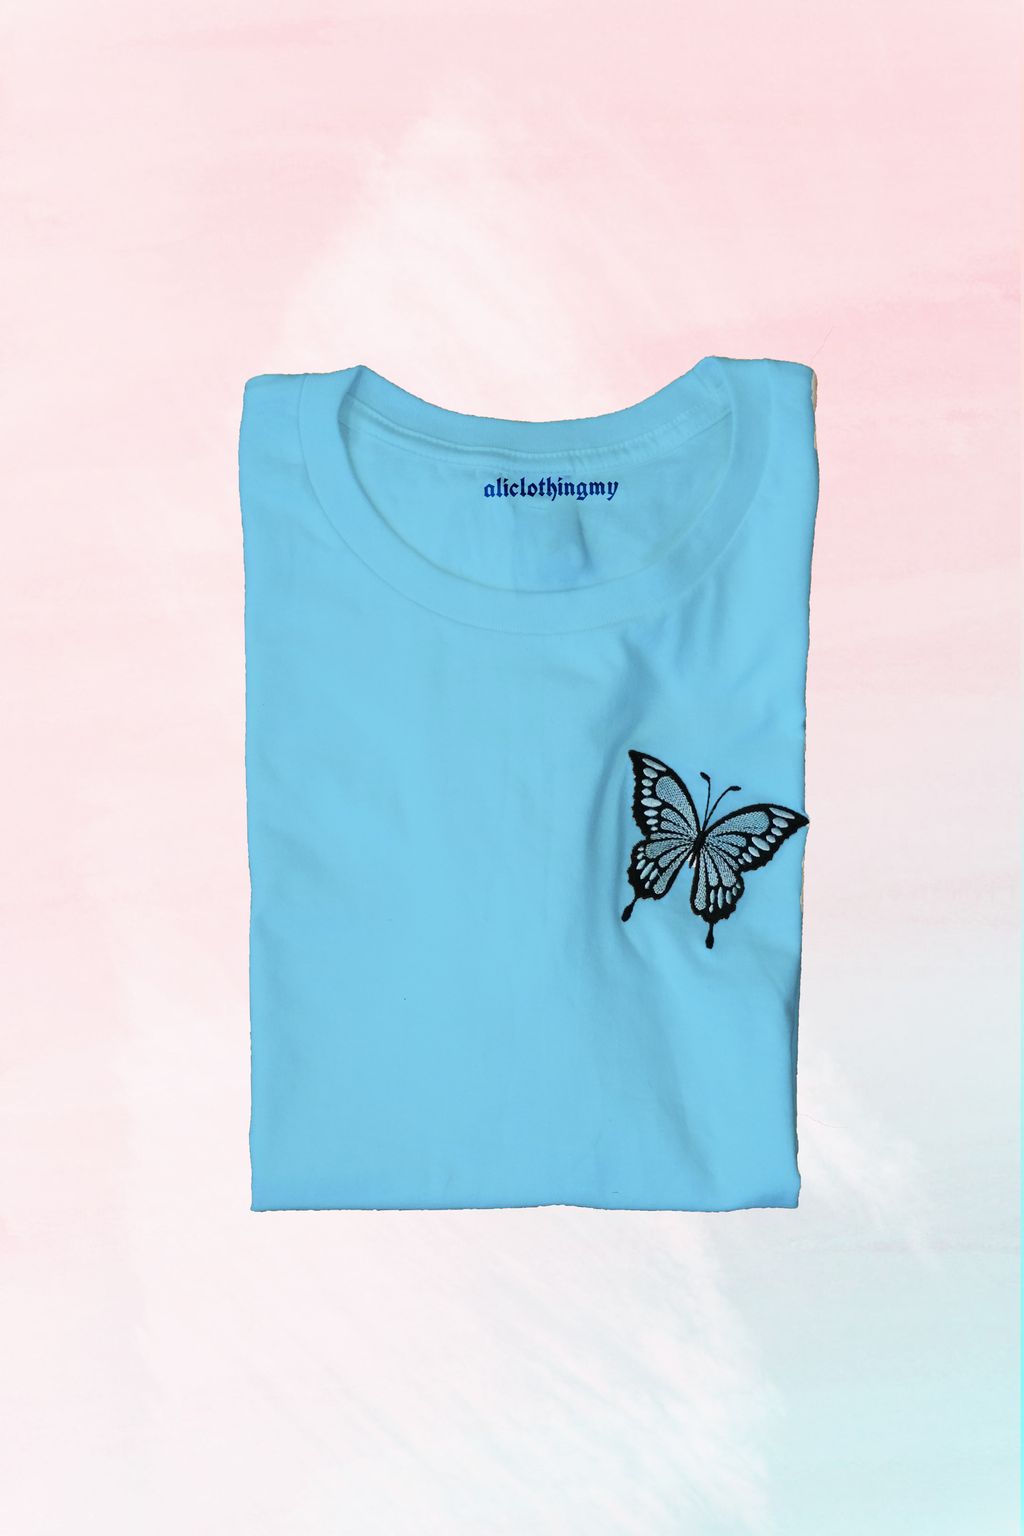 aliclothing-butterfly blue light.jpg